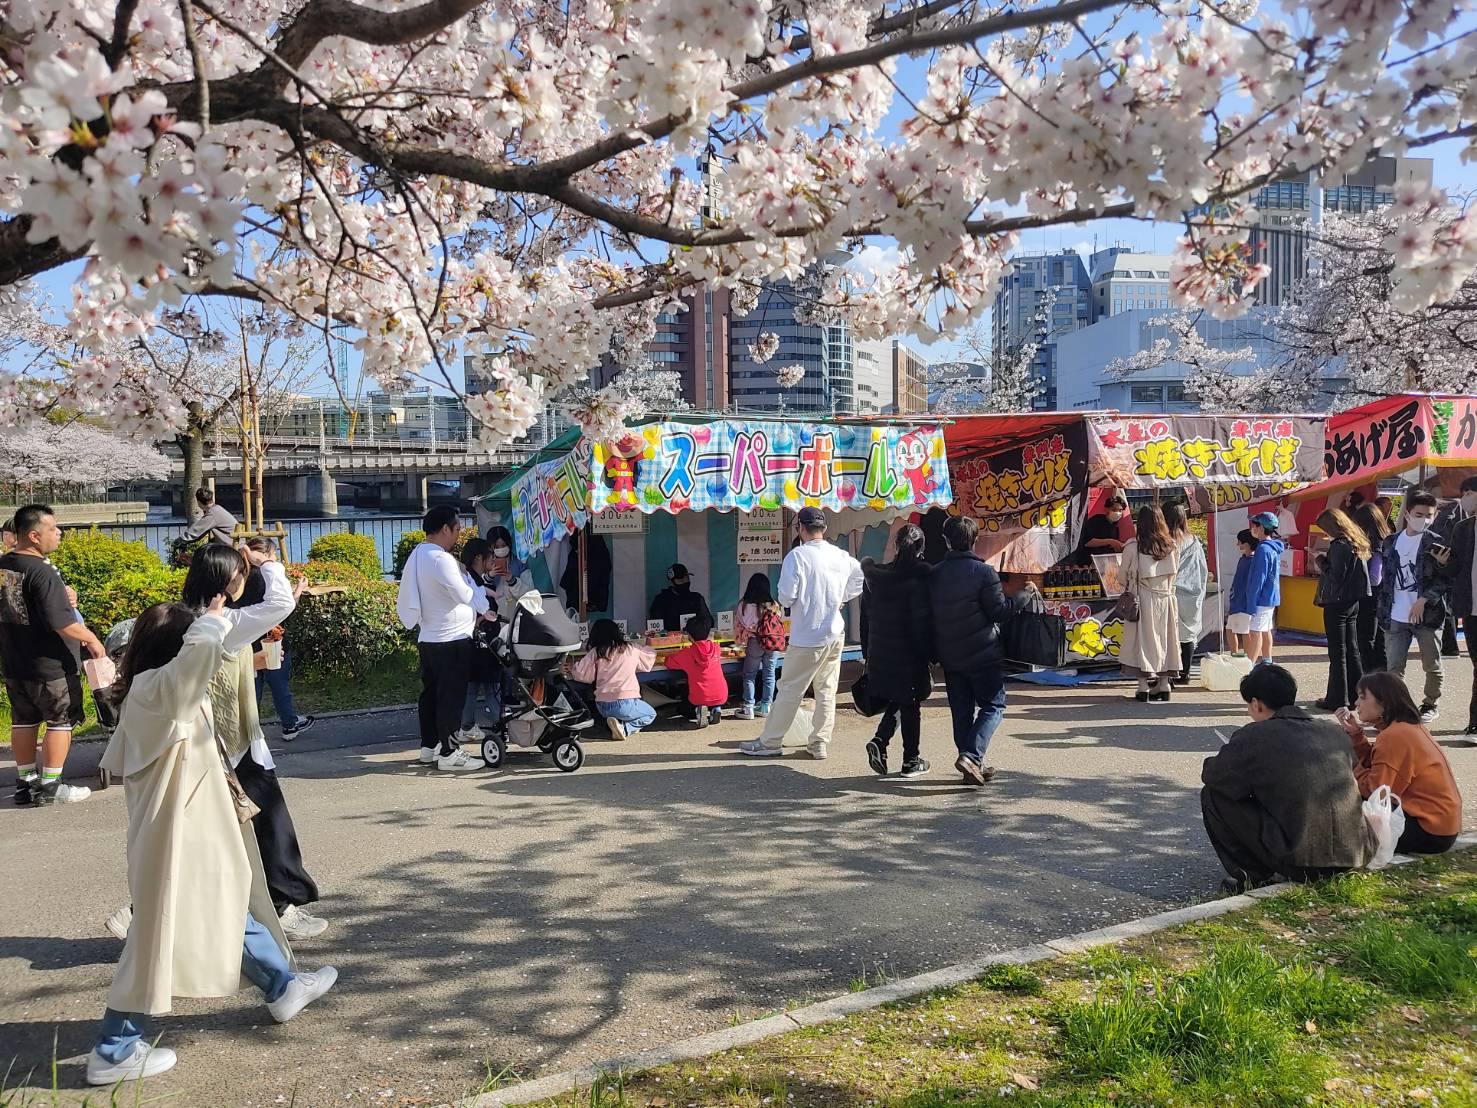 cherry blossoms and food stands along okawa, sakuranomiya 